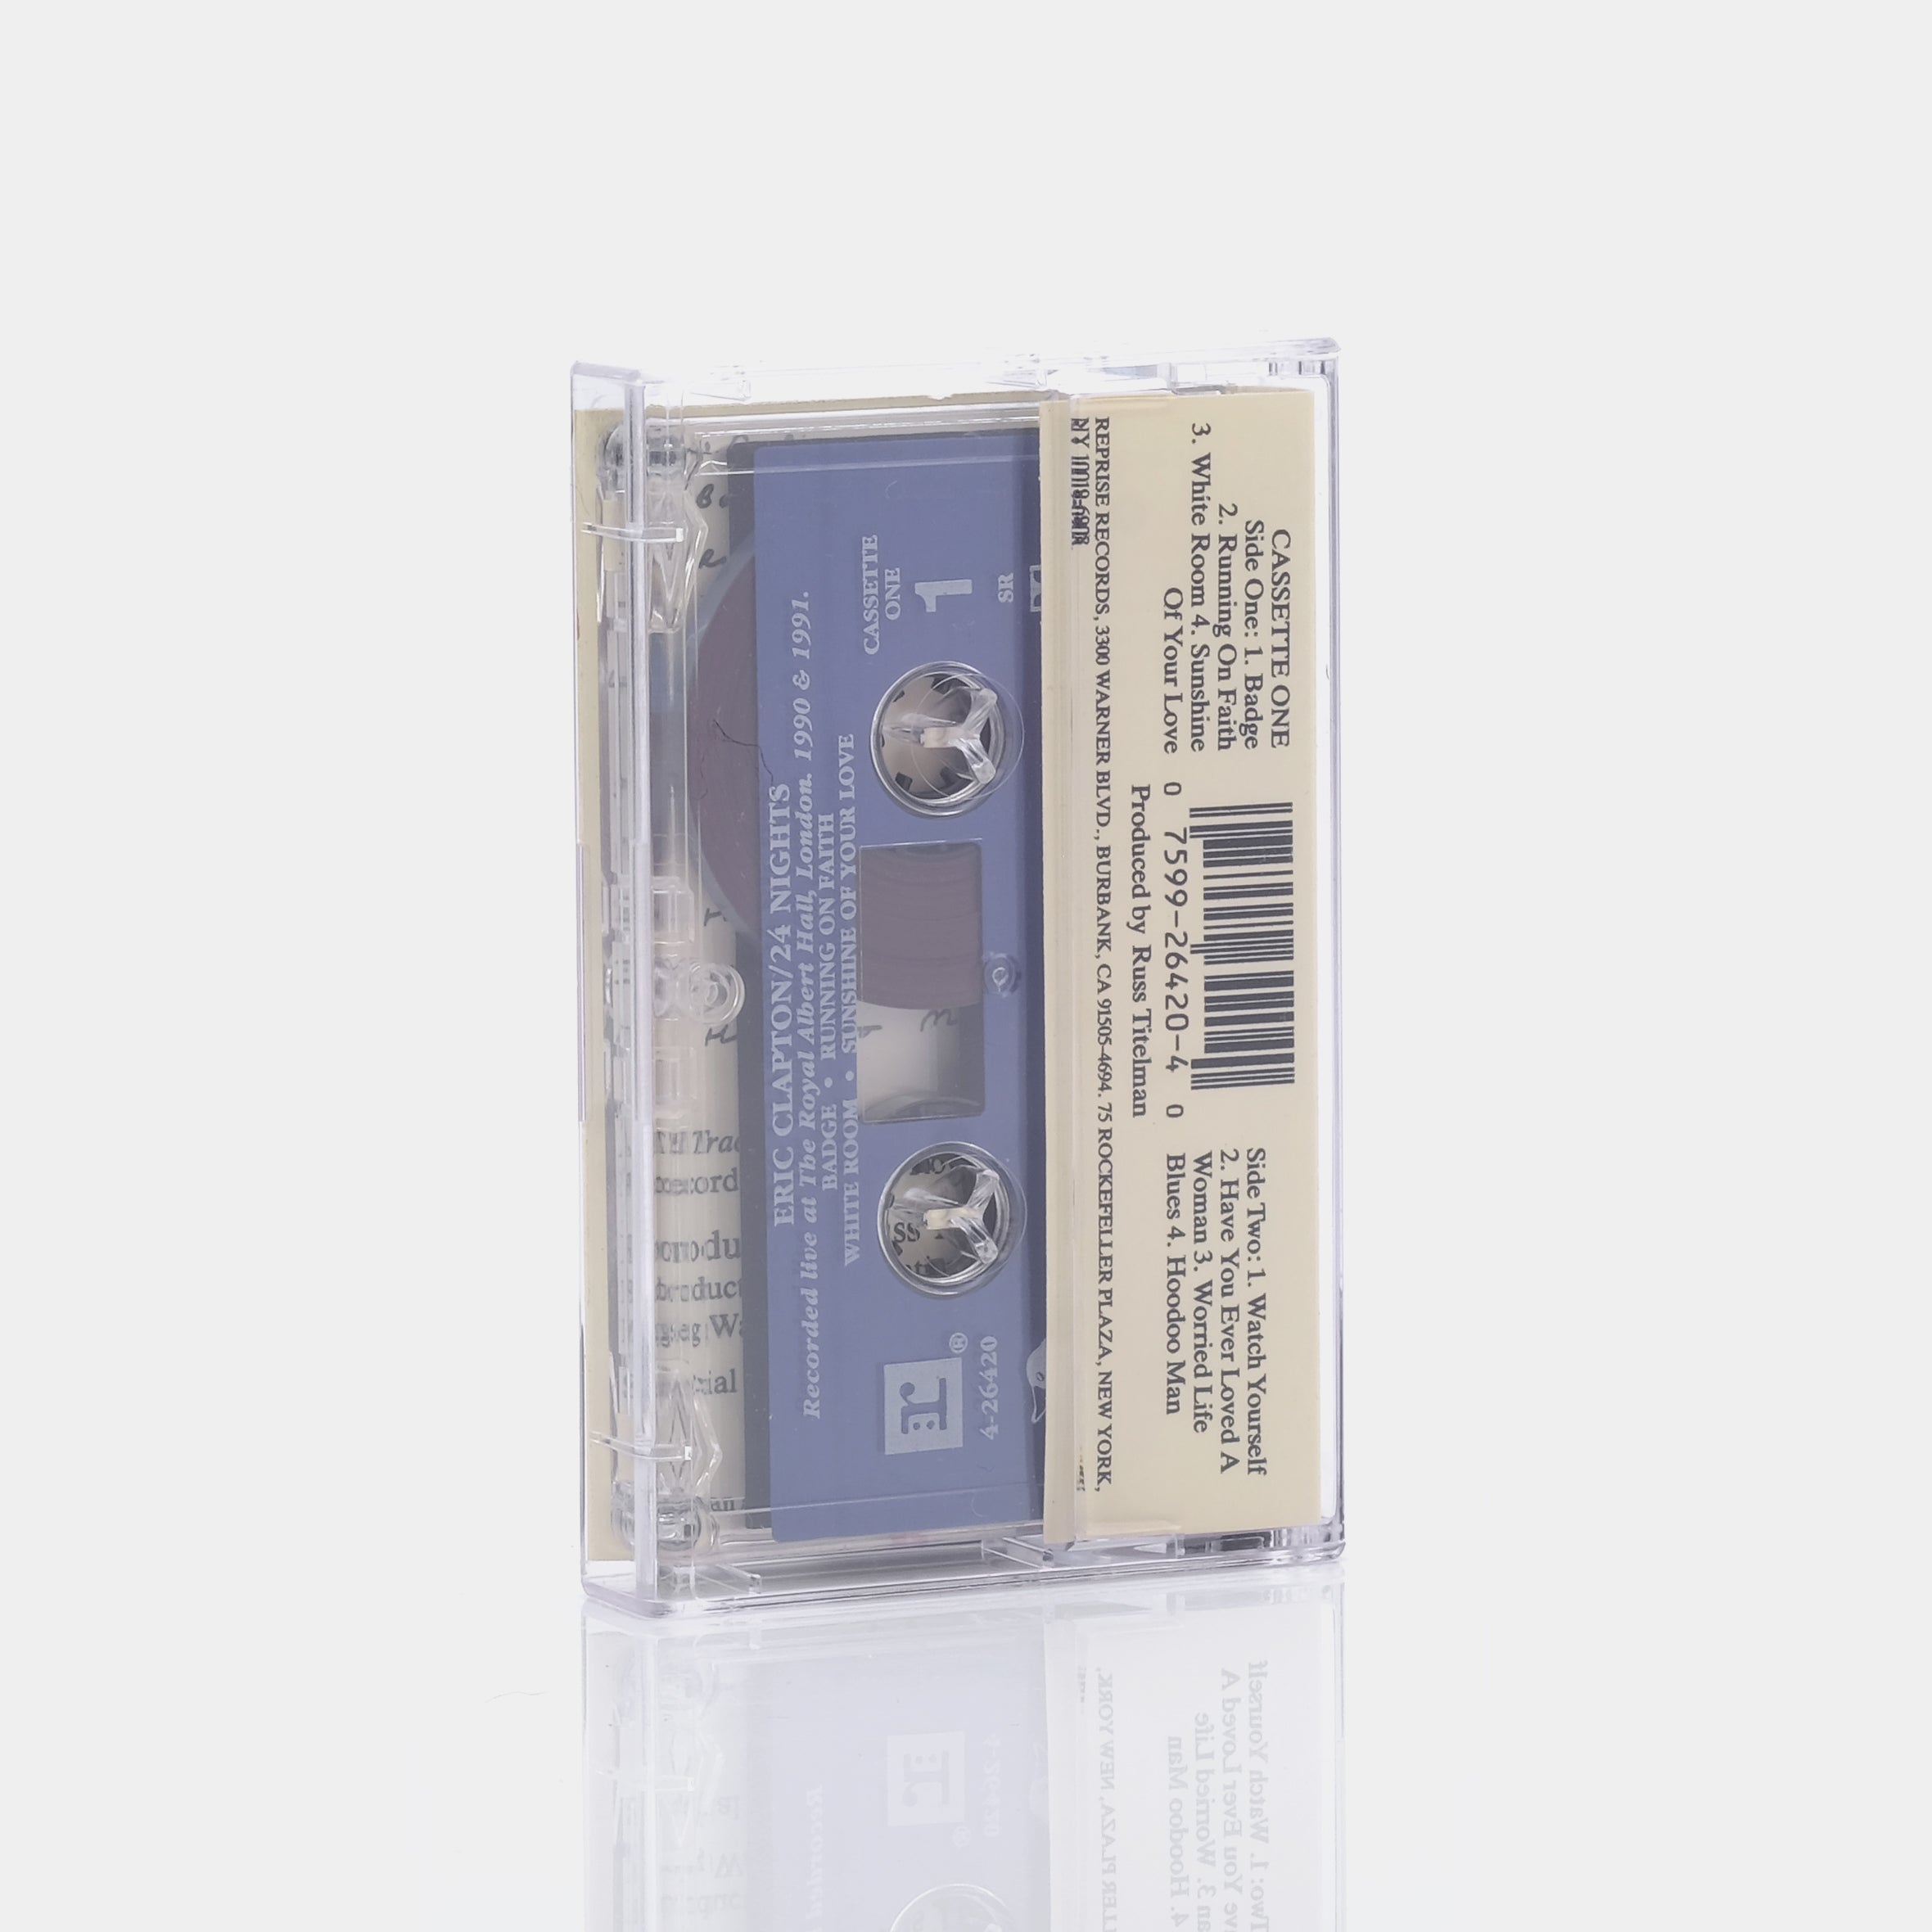 Eric Clapton - 24 Nights Cassette Tape